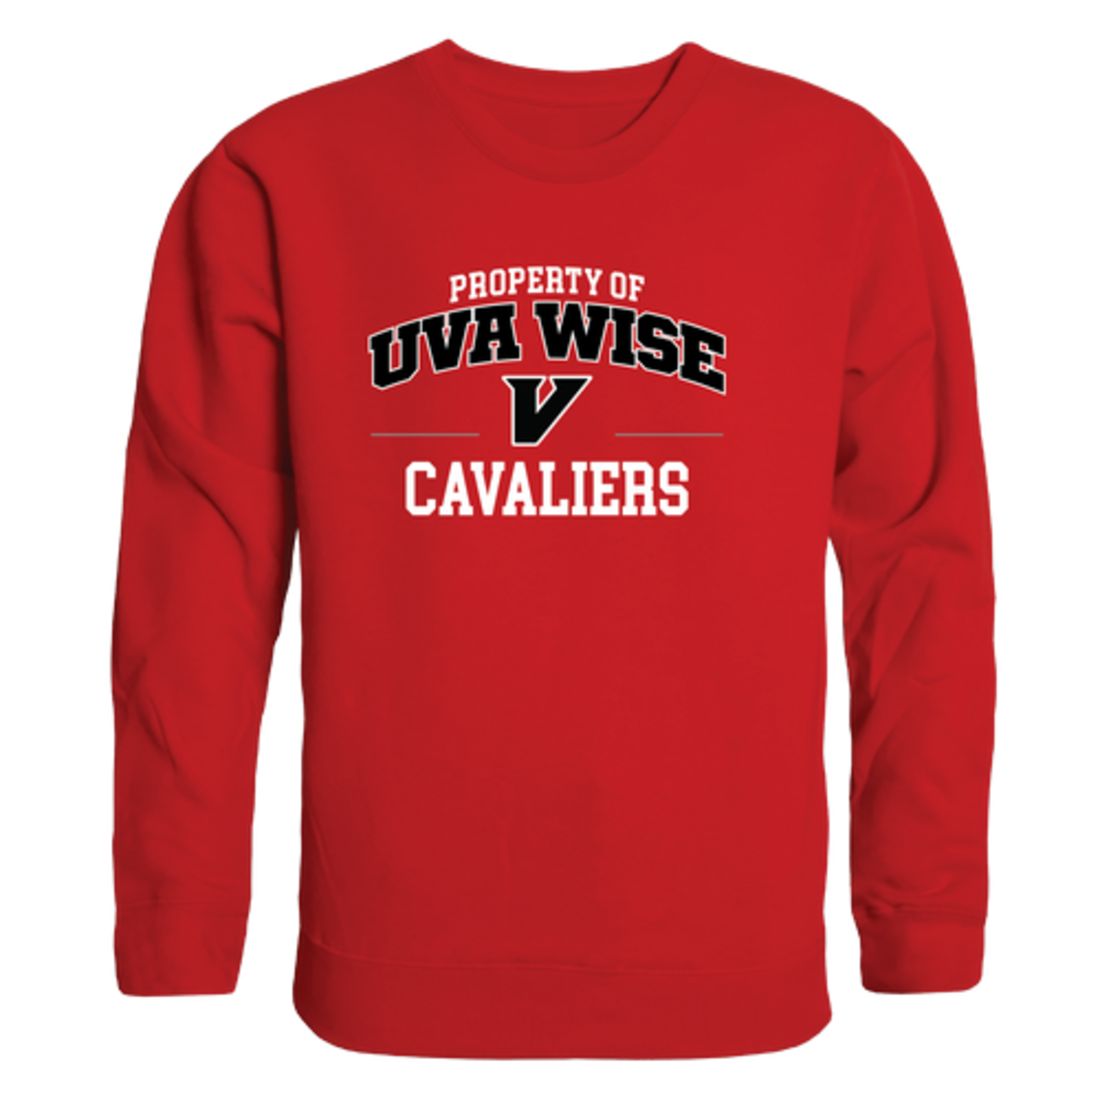 University-of-Virginia's-College-at-Wise-Cavaliers-Property-Fleece-Crewneck-Pullover-Sweatshirt